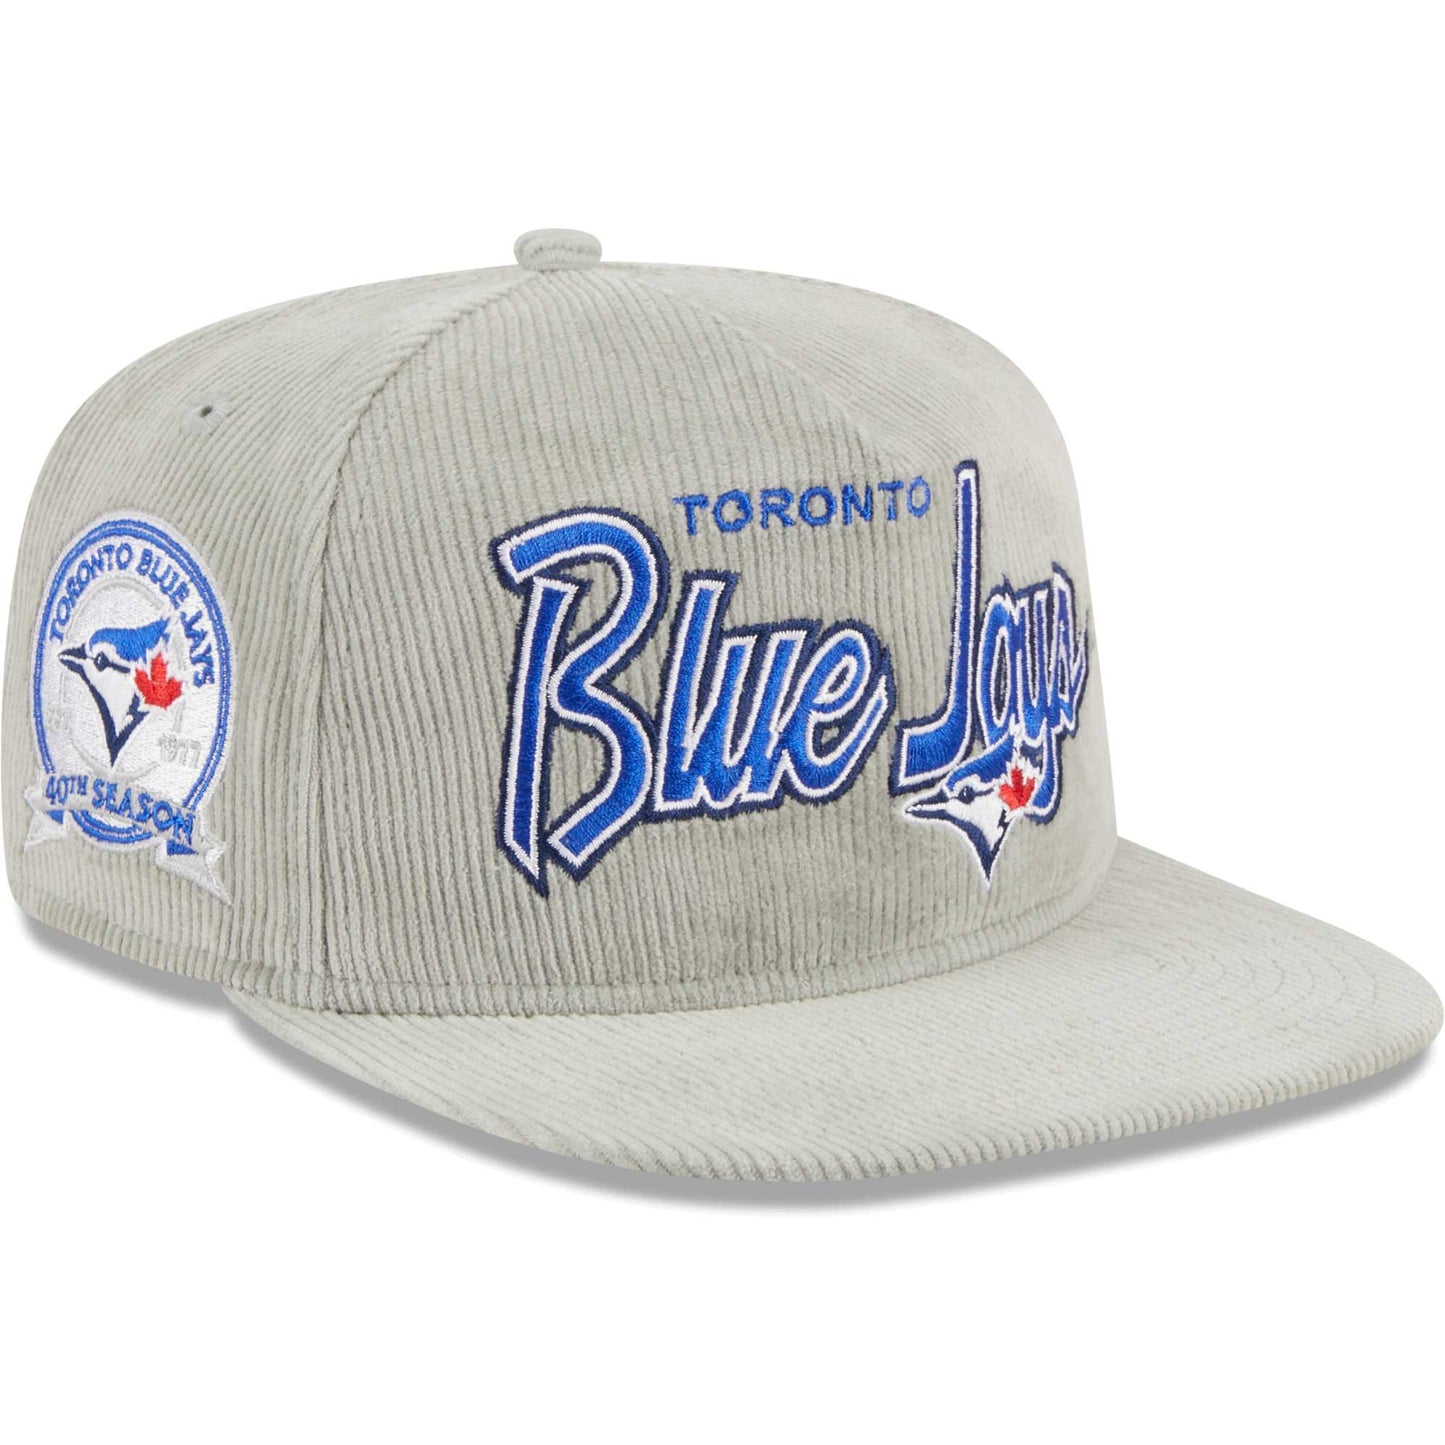 Toronto Blue Jays New Era Corduroy Golfer Adjustable Hat - Gray